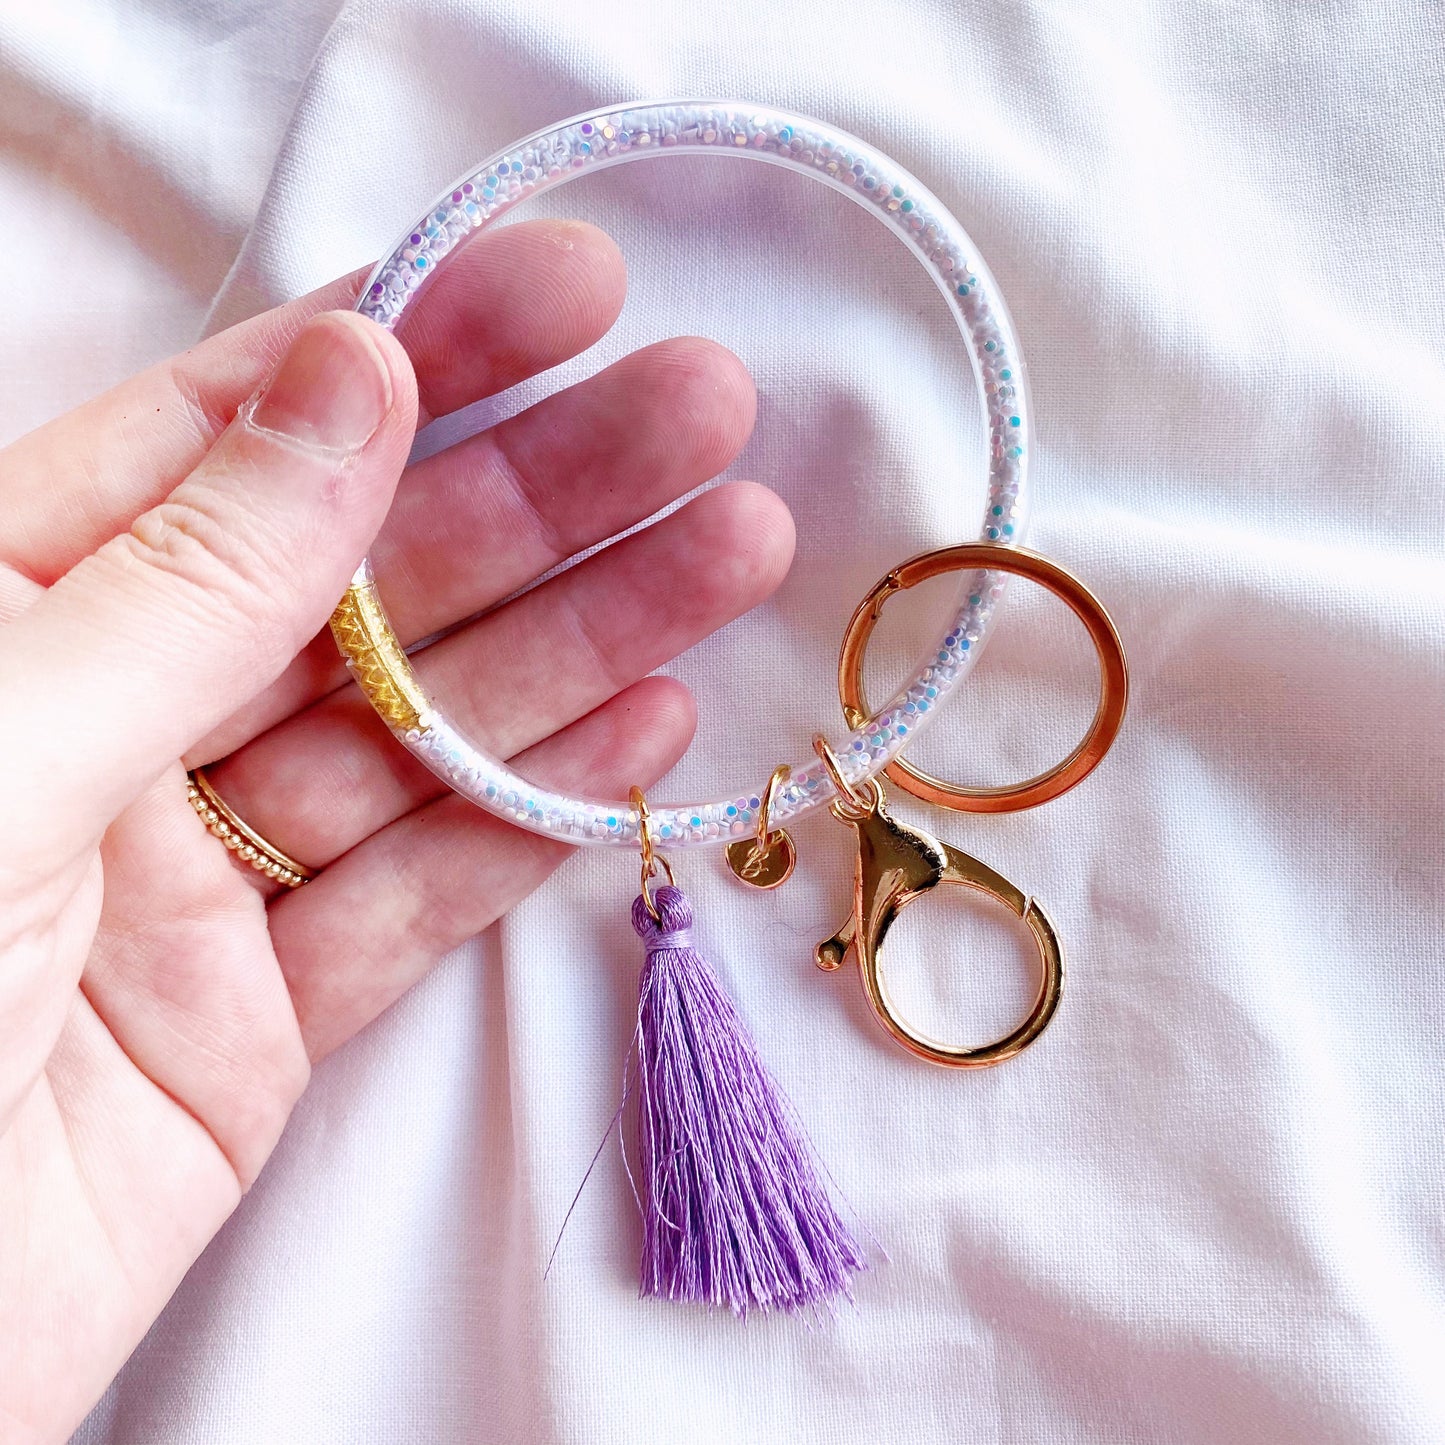 holographic white glitter and purple tassel, jelly bangle bangle and keychain